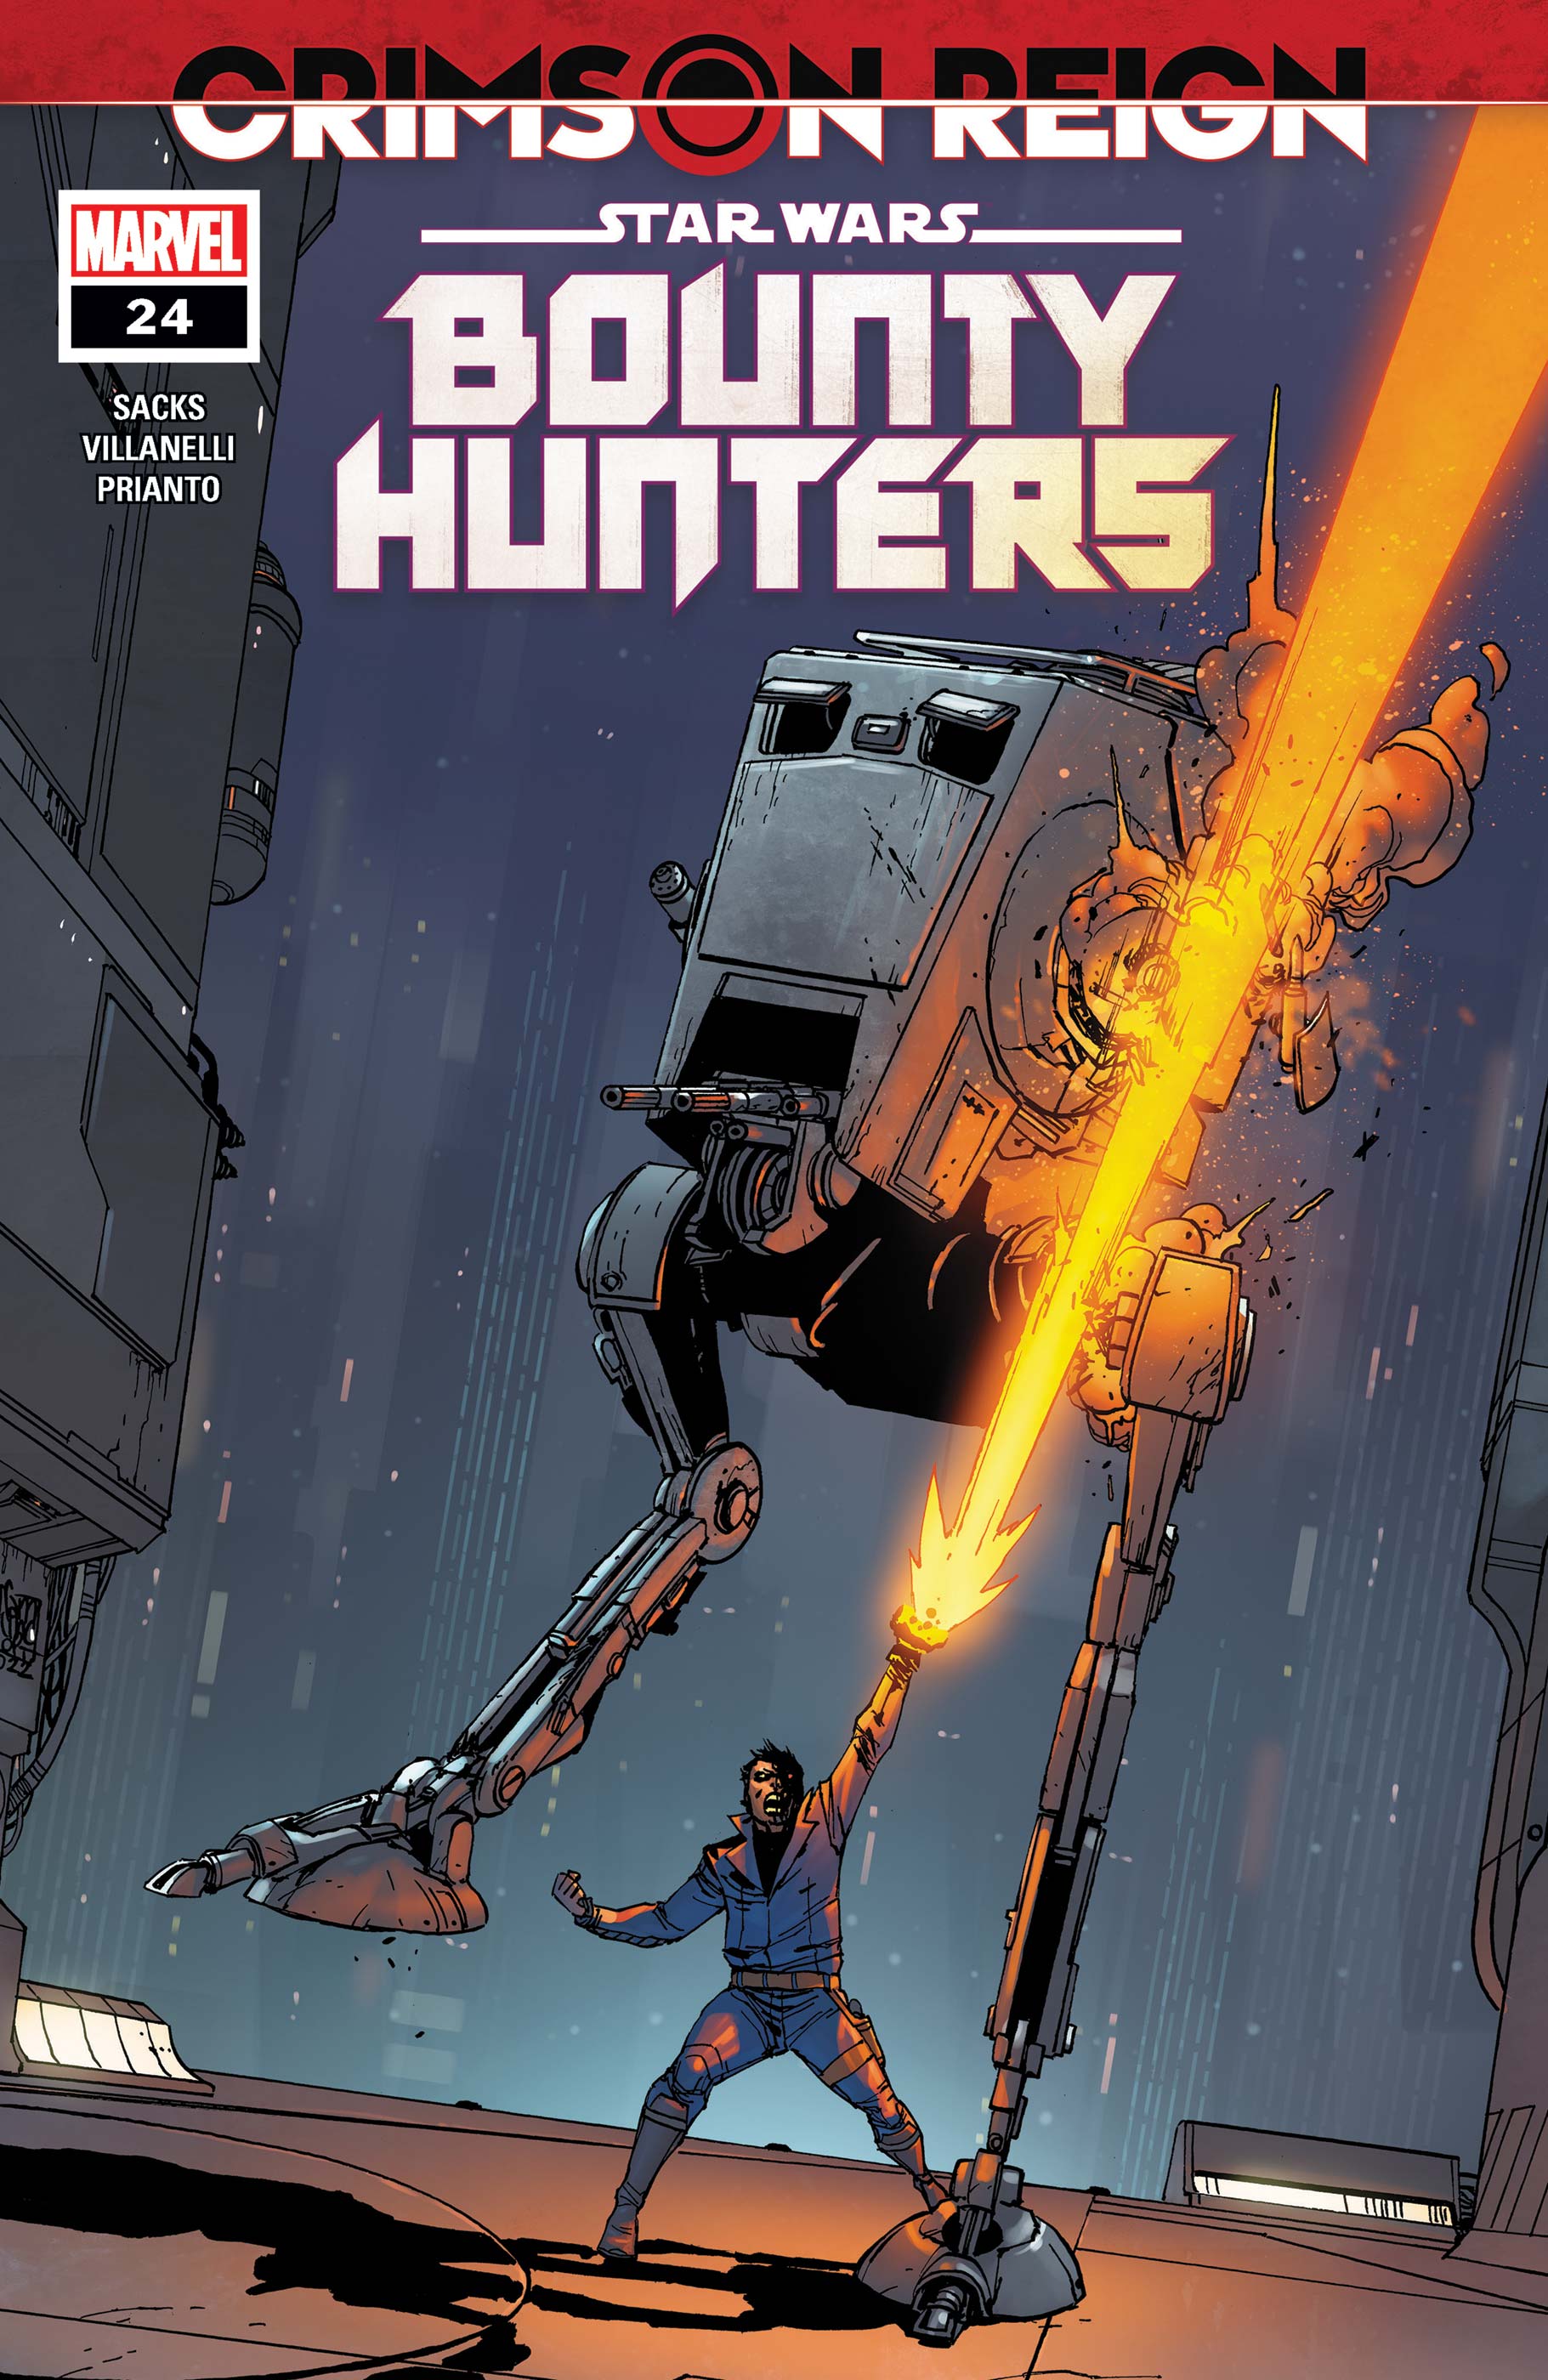 Star Wars: Bounty Hunters (2020) #24